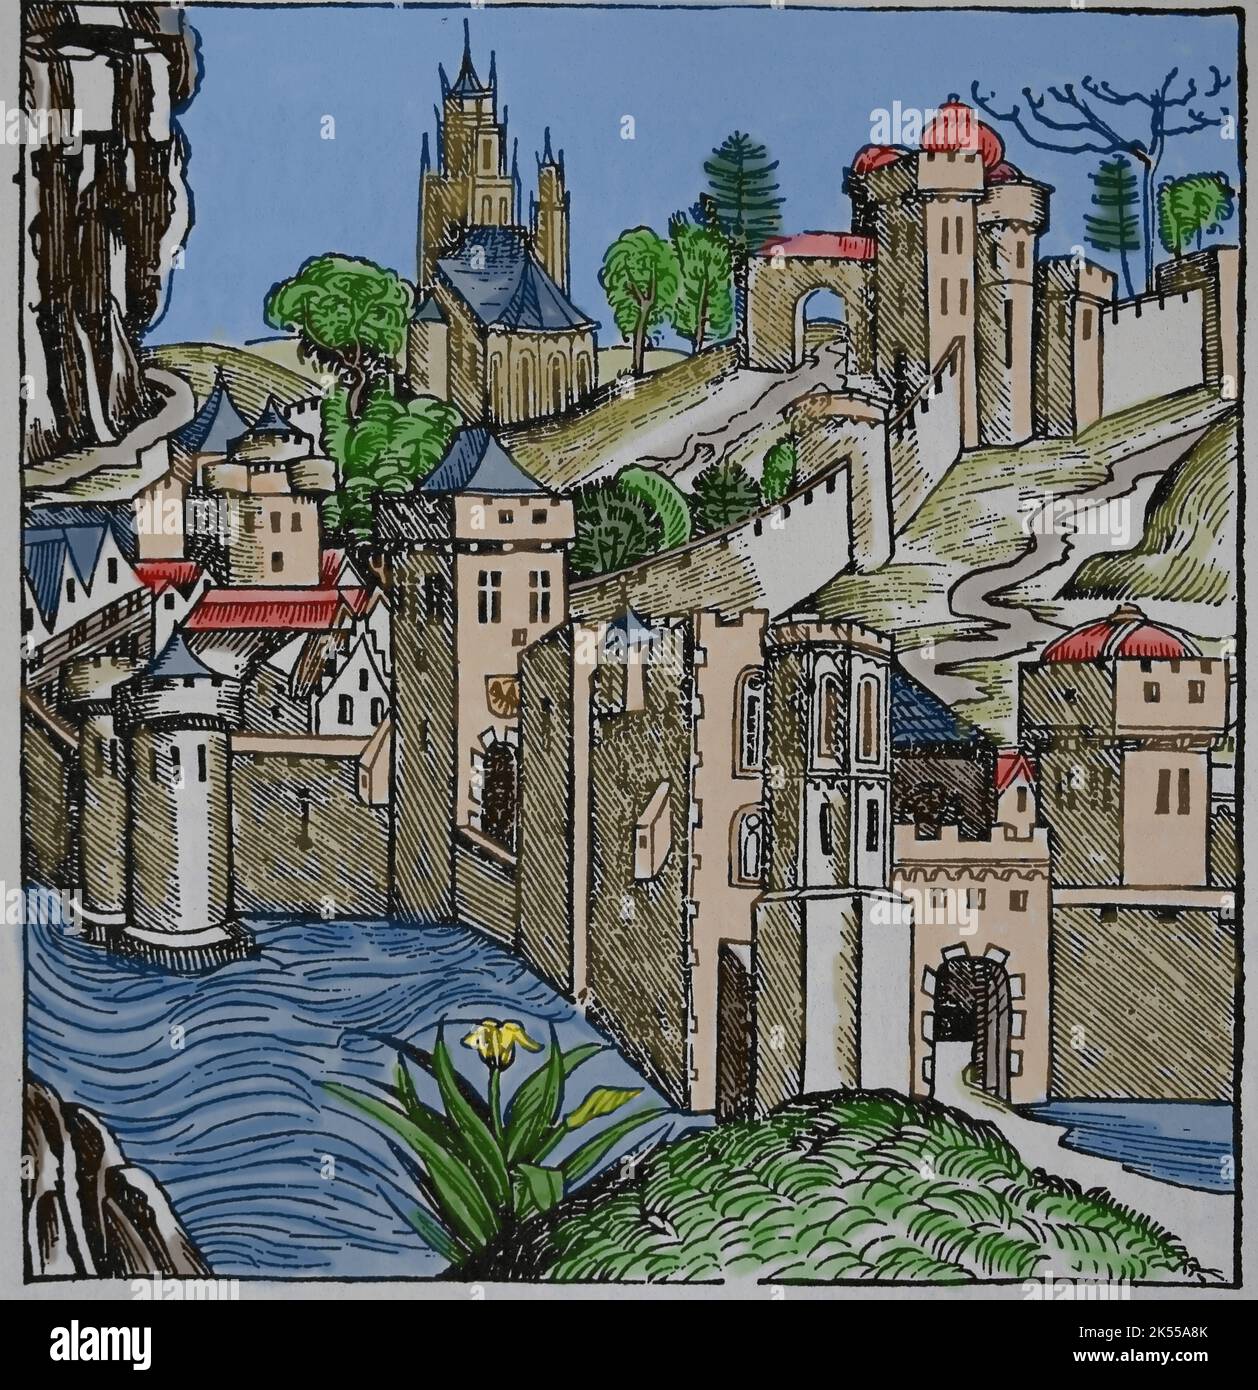 Mepmhis. Stich der Nürnberger Chronik, 15.. Jahrhundert. Stockfoto